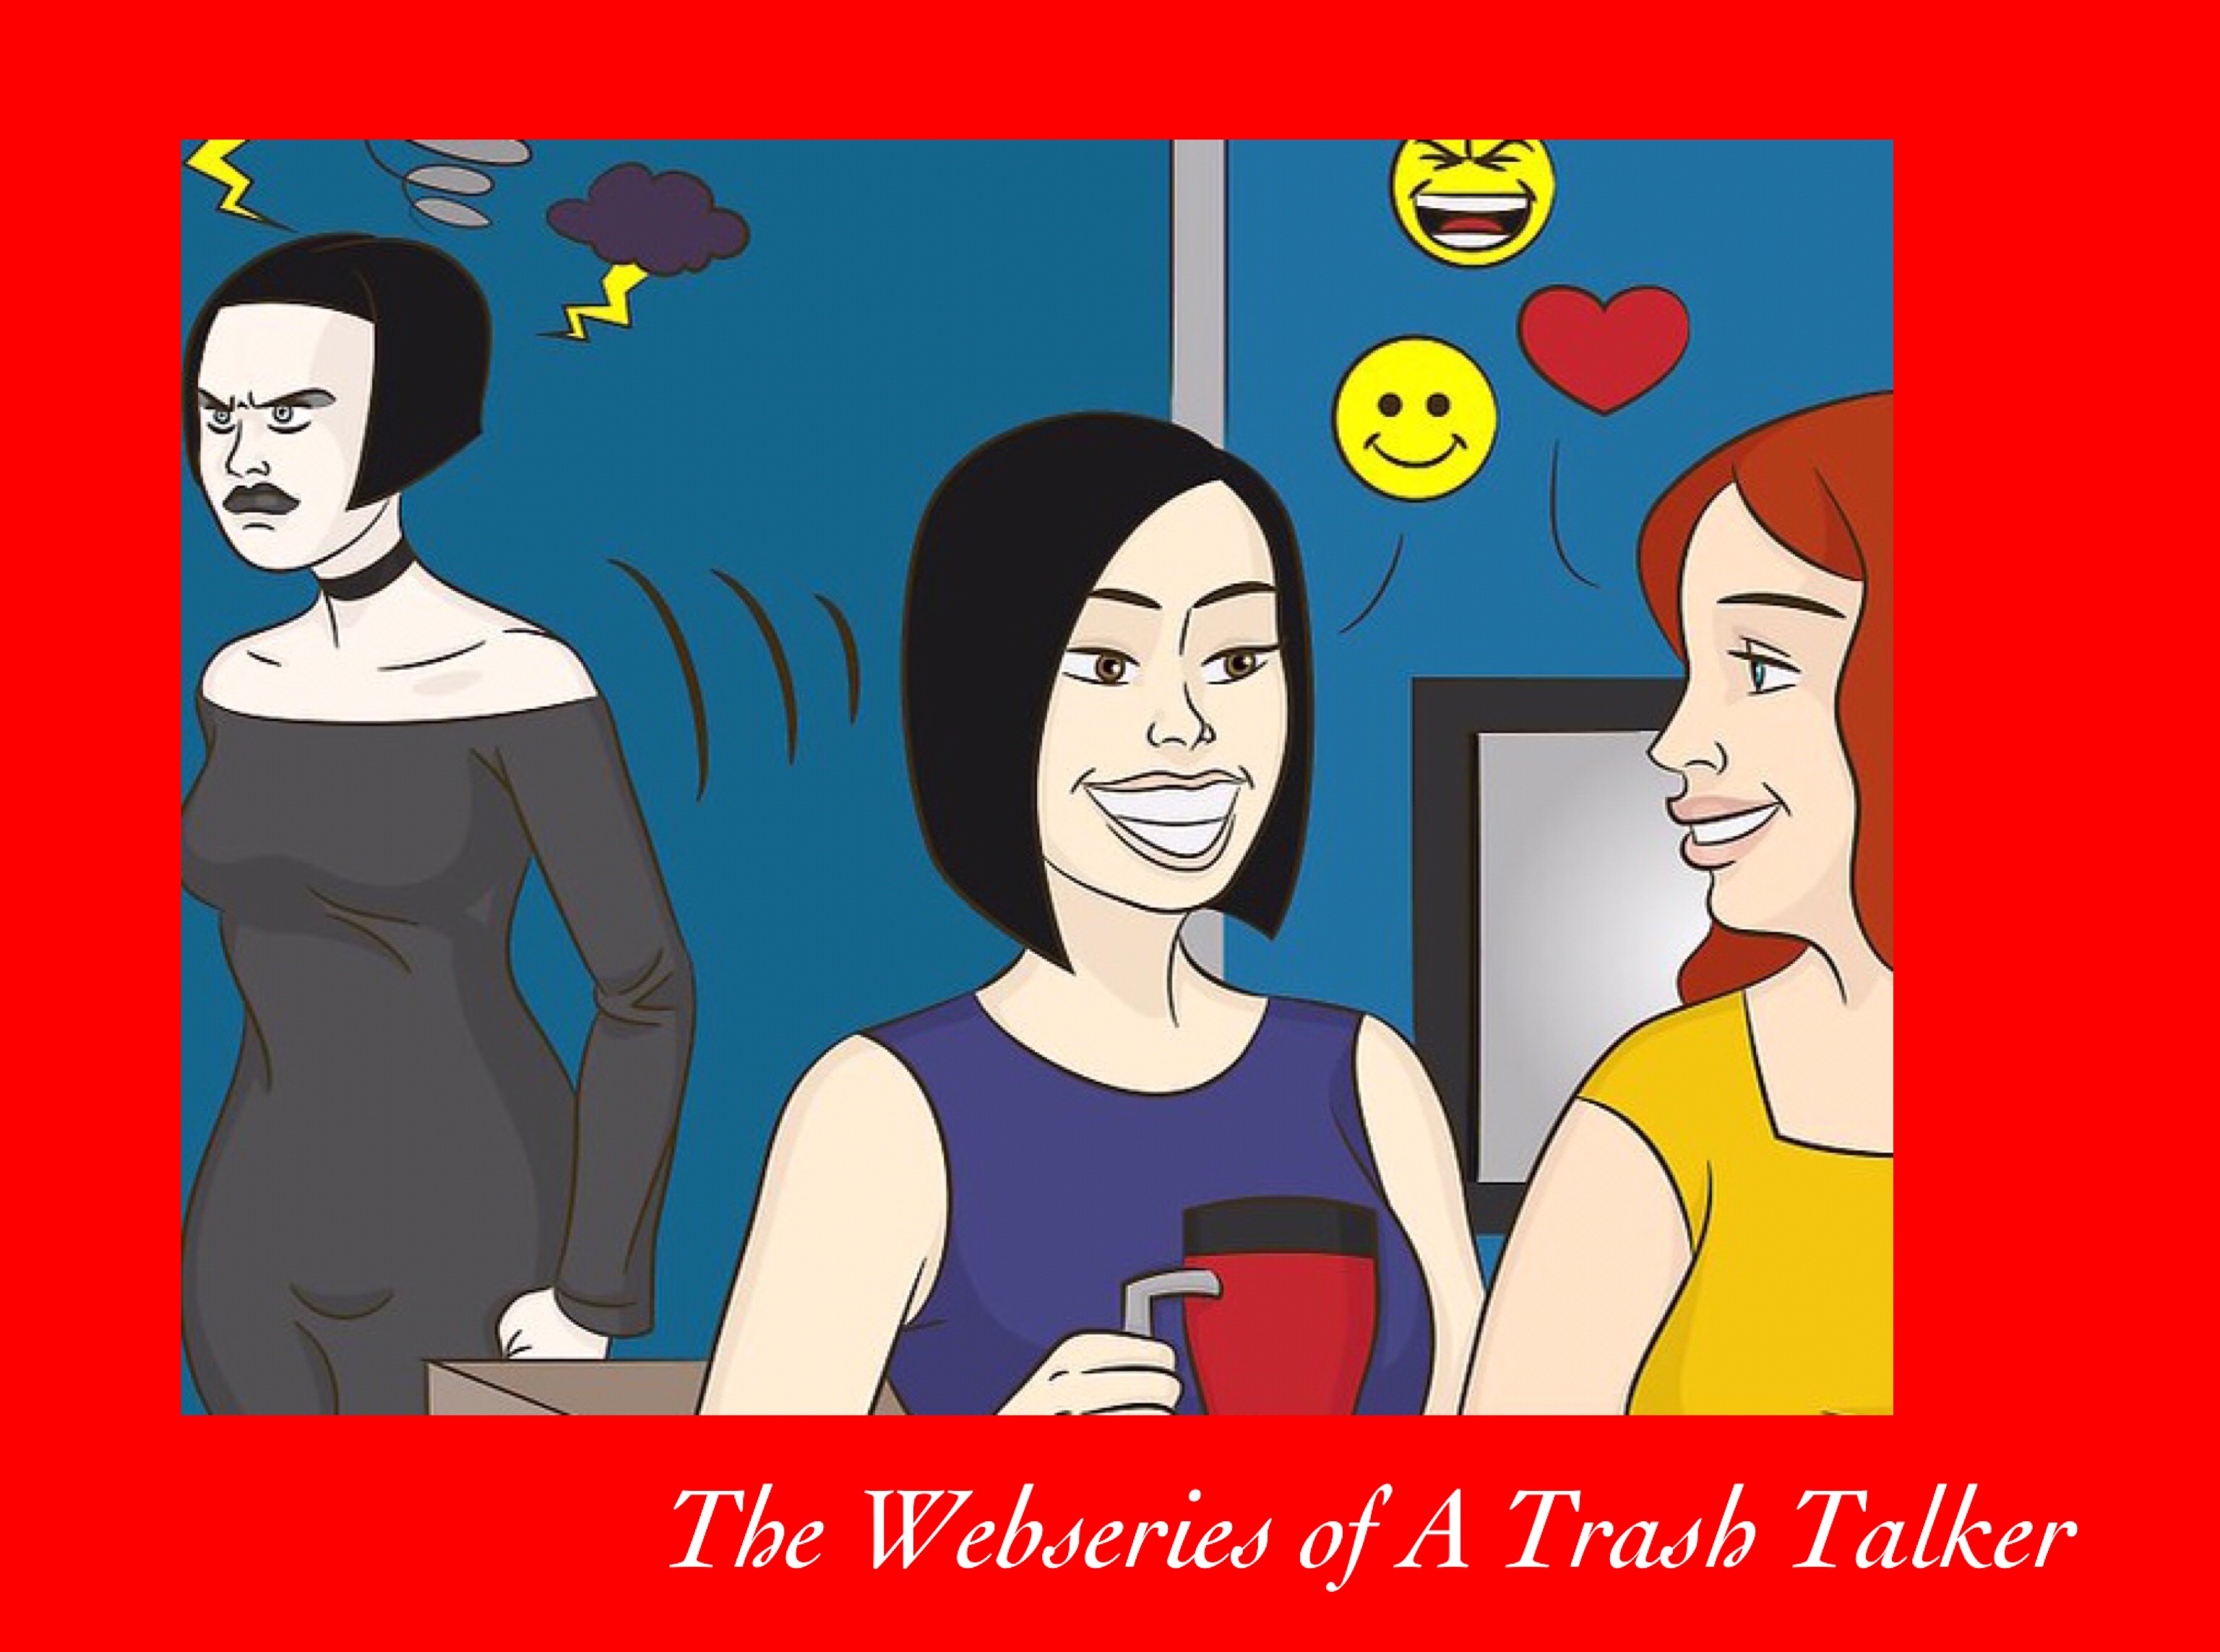 The Webseries of a Trash Talker